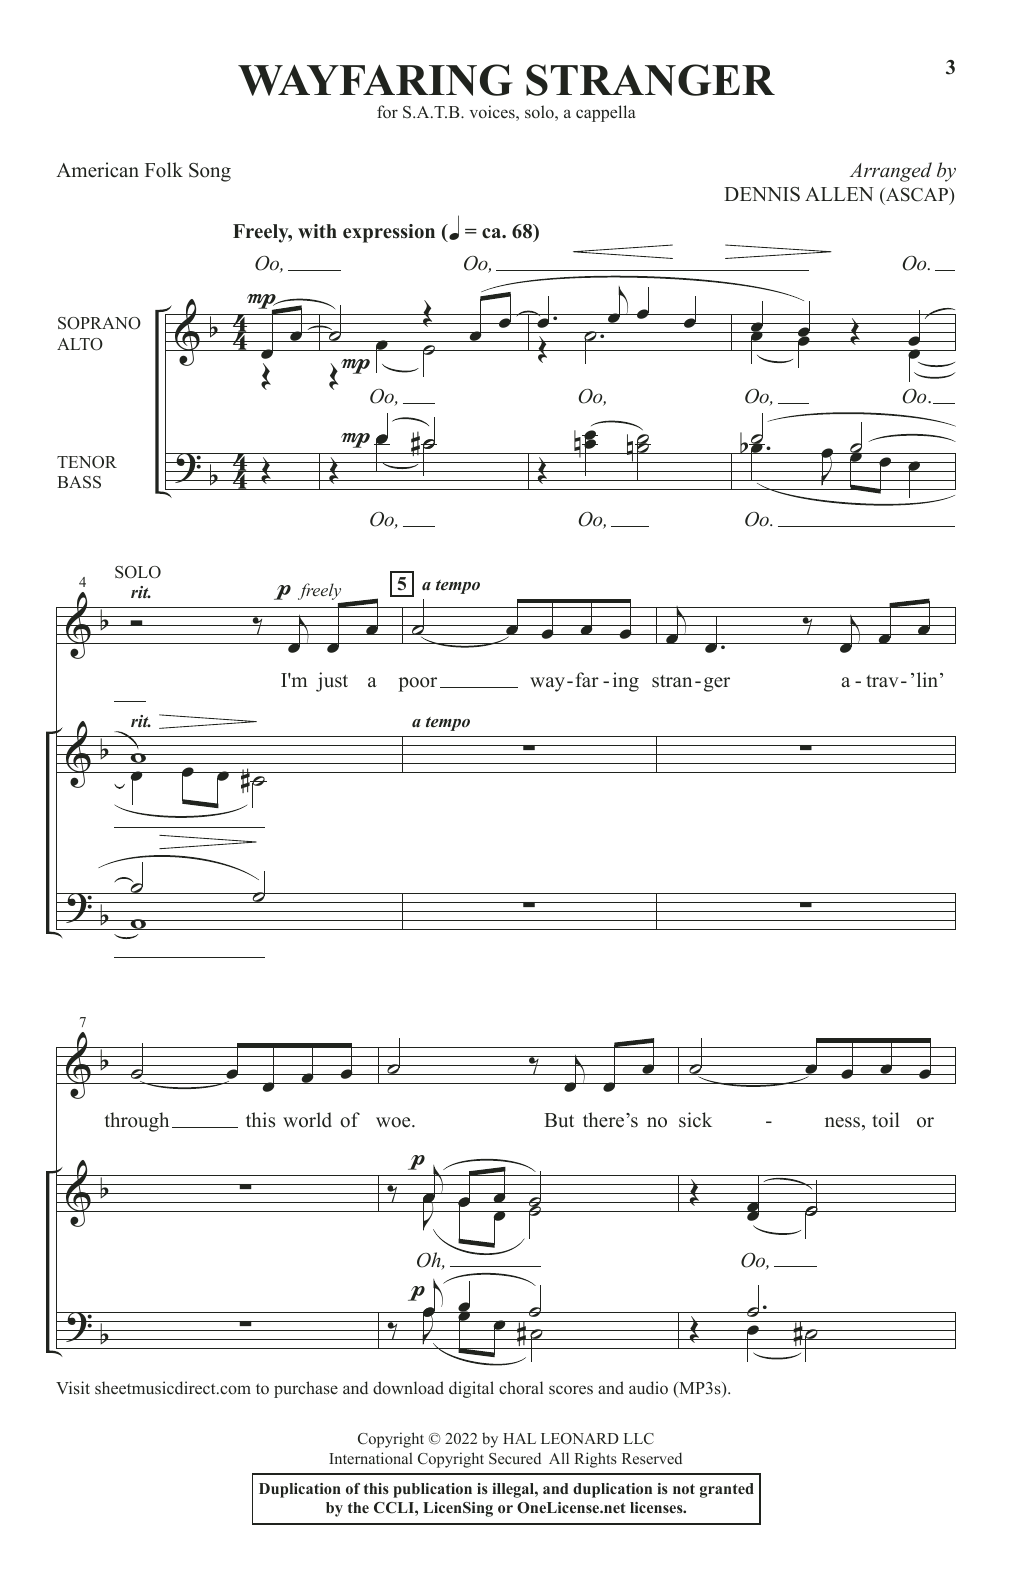 Download American Folk Song Wayfaring Stranger (arr. Dennis Allen) Sheet Music